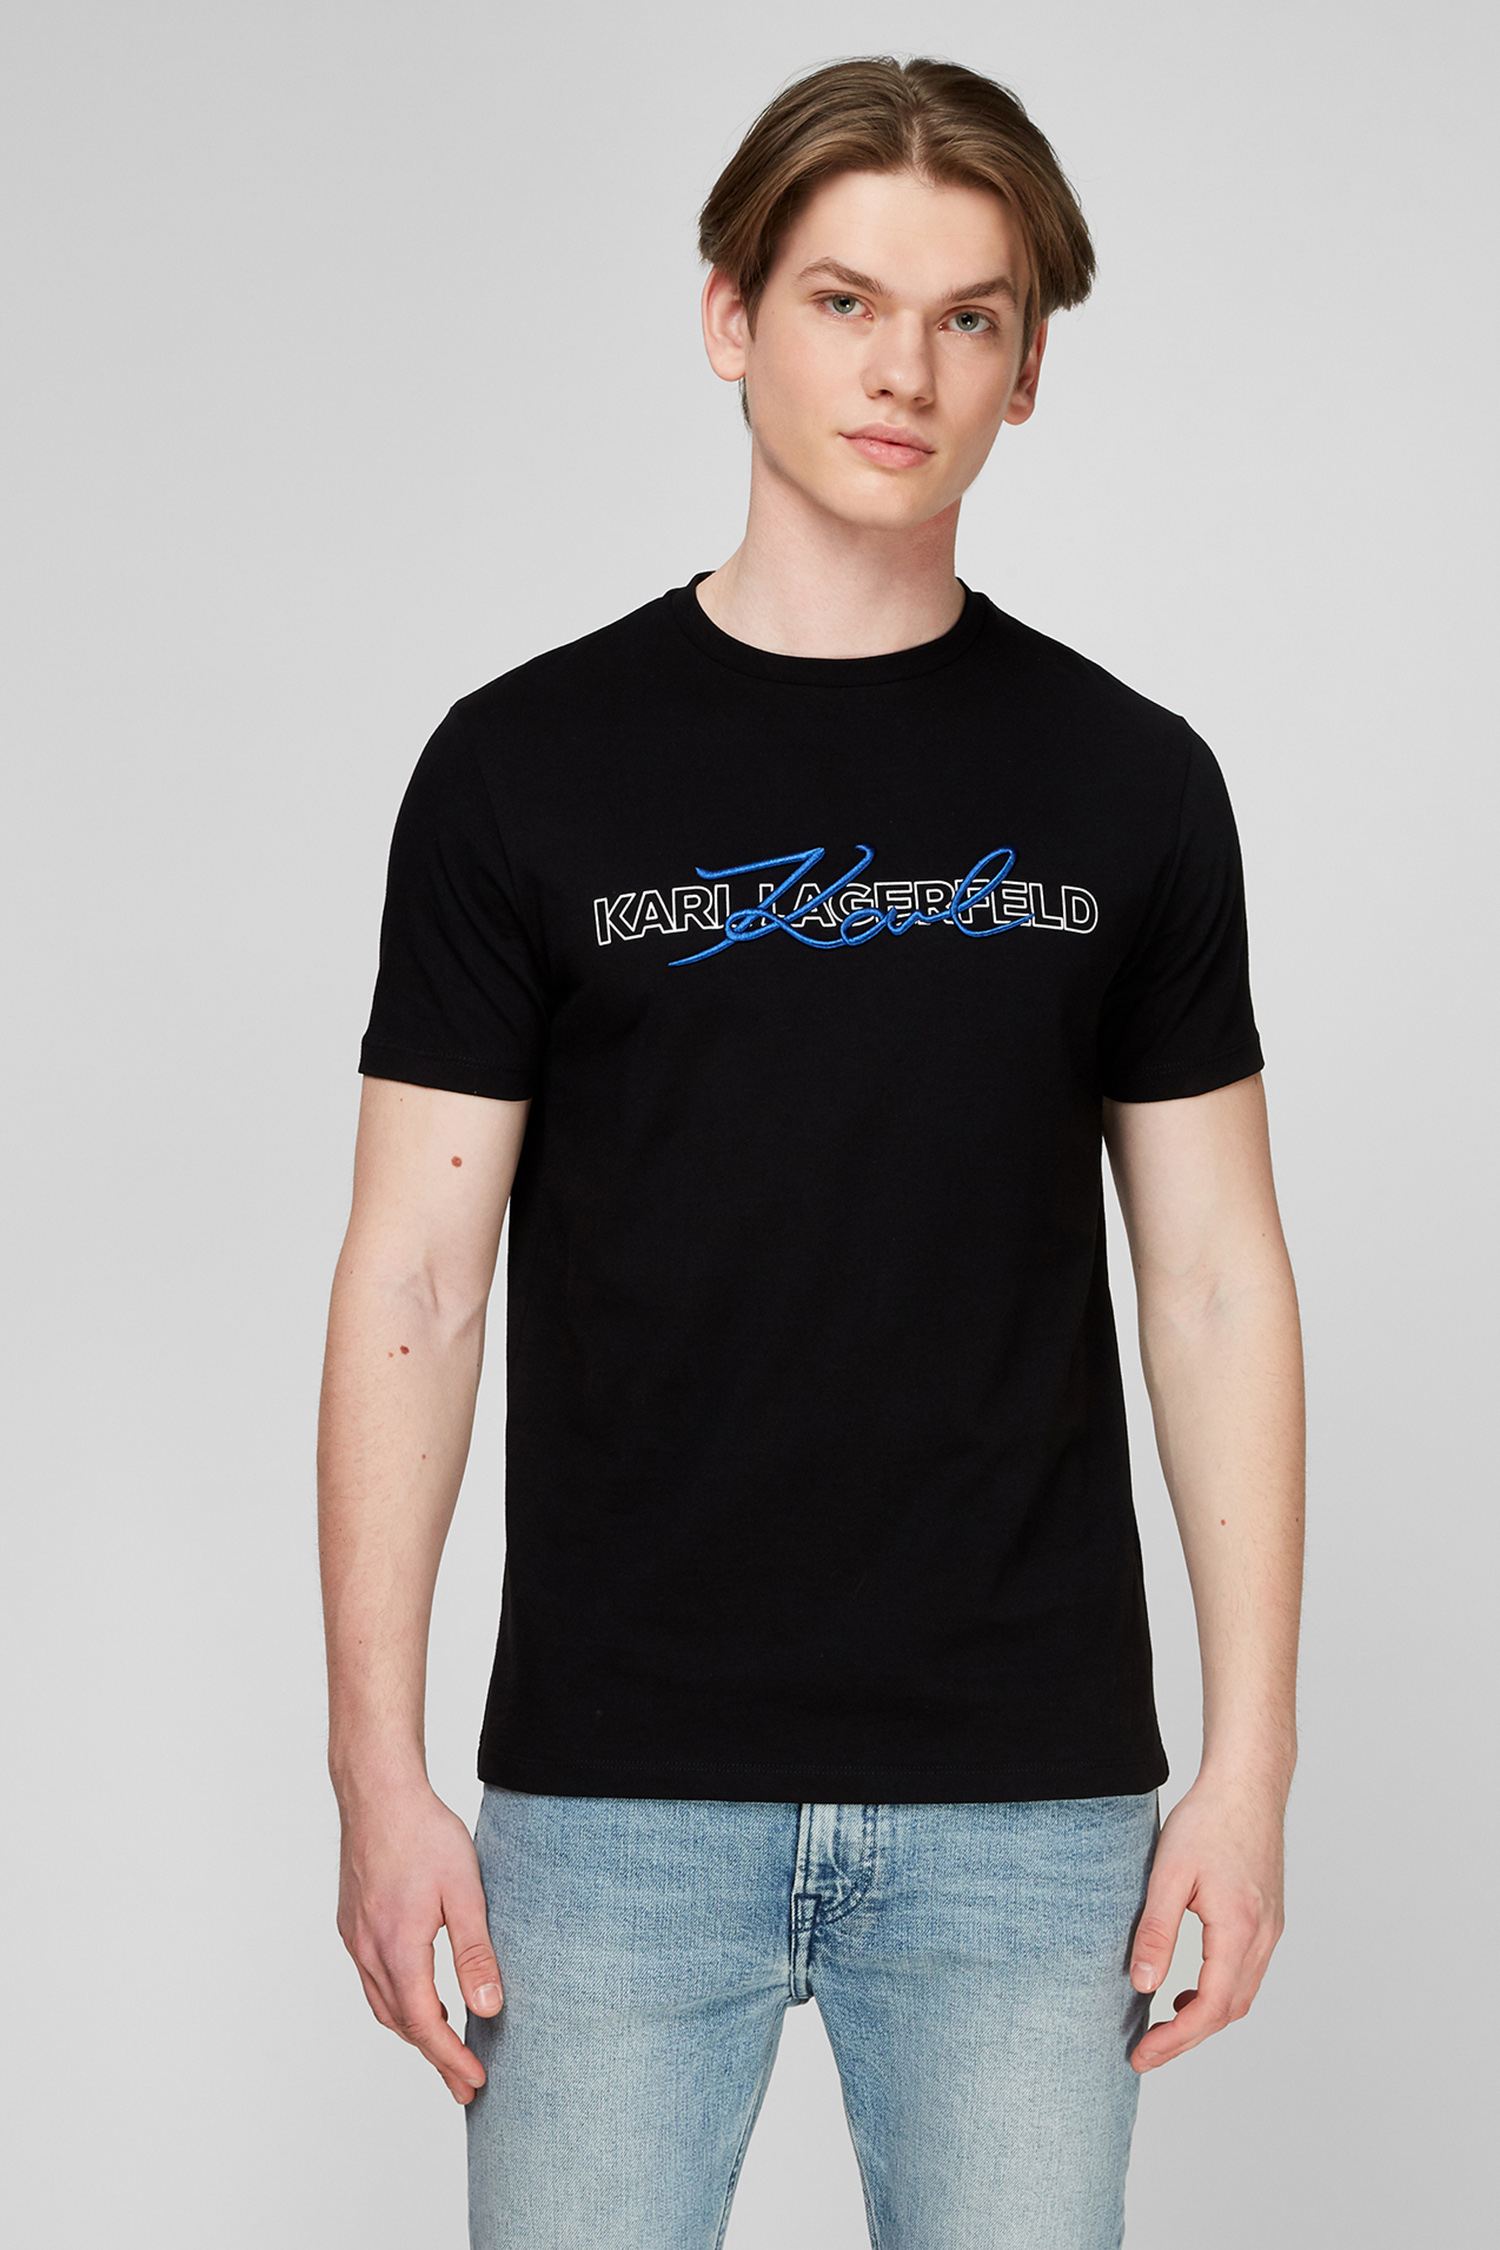 Черная футболка для парней Karl Lagerfeld 511225.755053;990